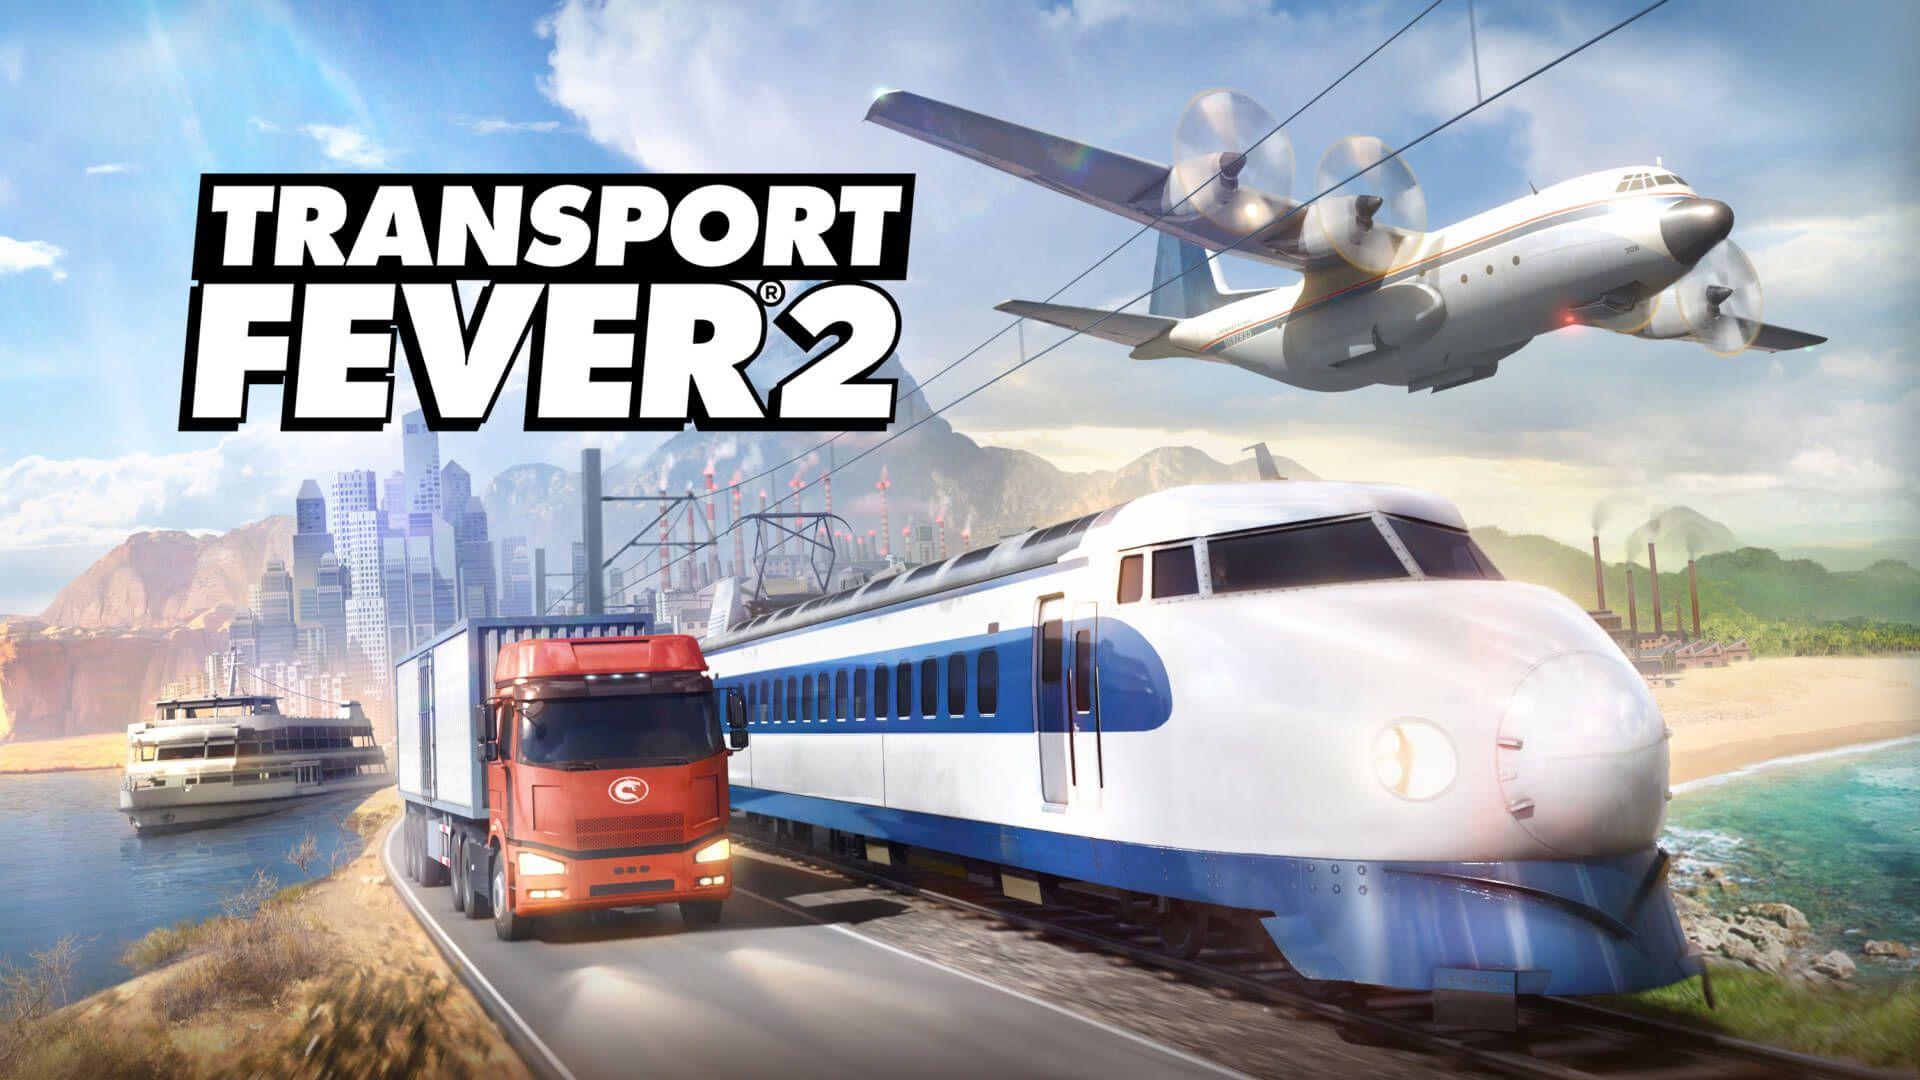 Transport Fever 2 Cover Image